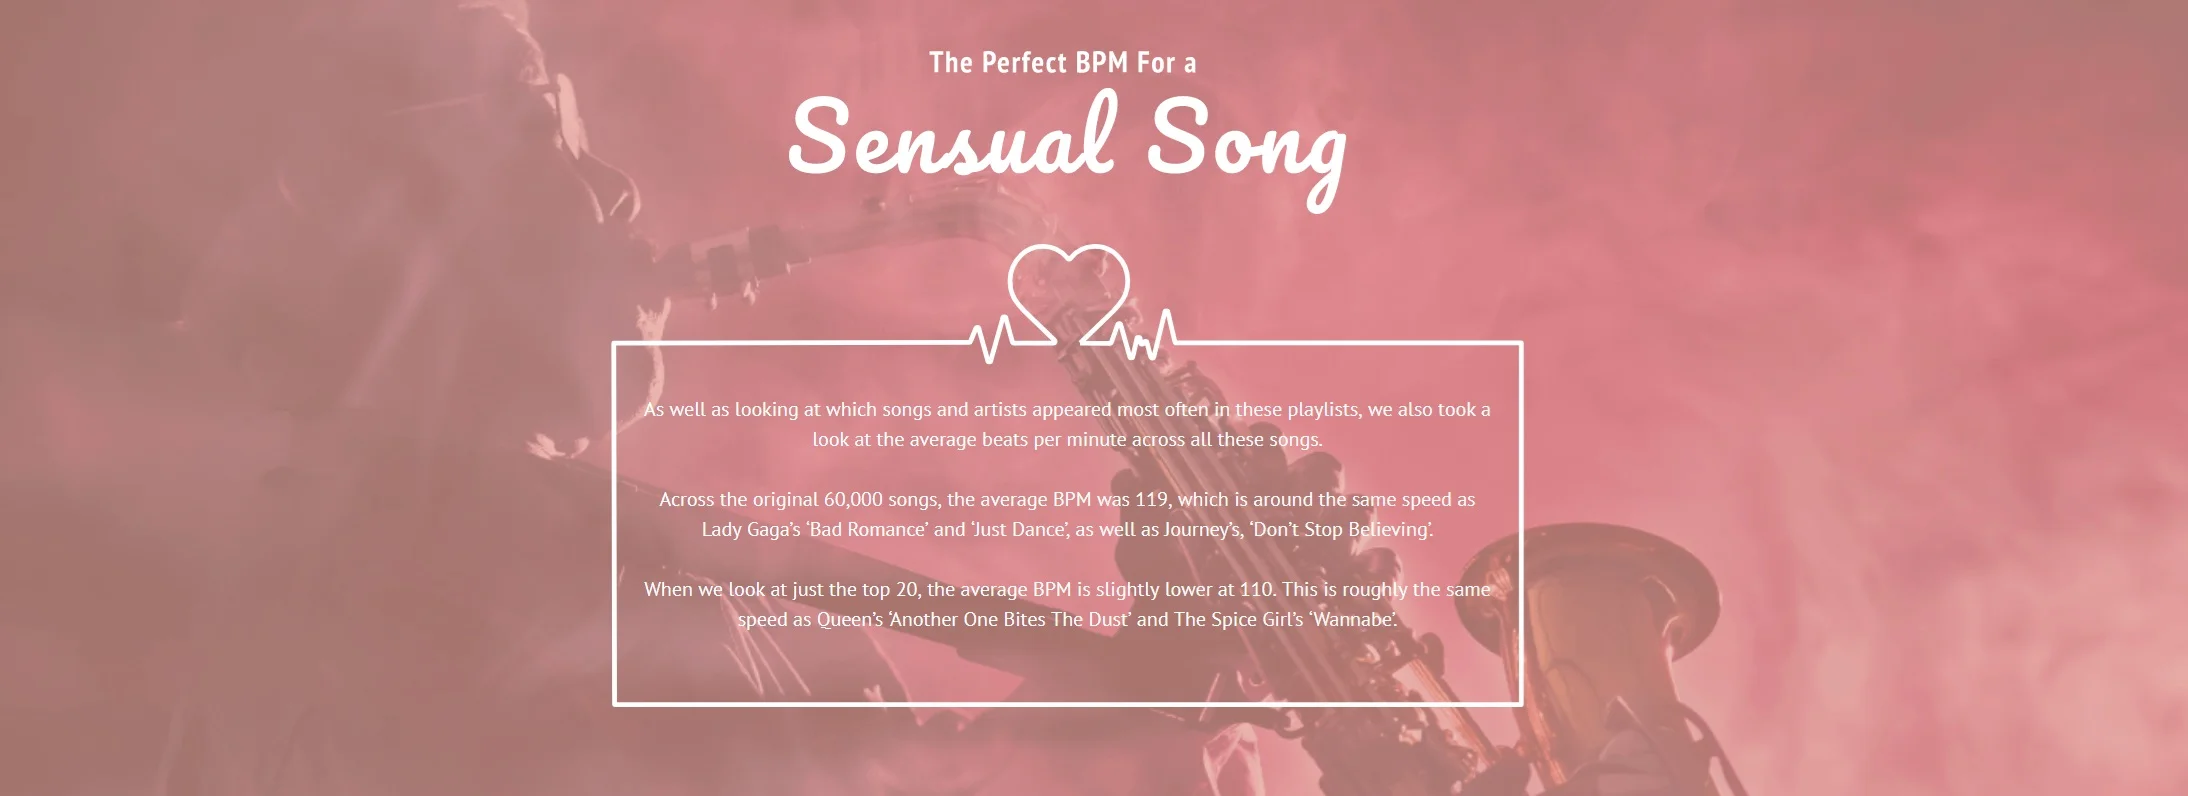 Sensual Songs - The perfect bpm